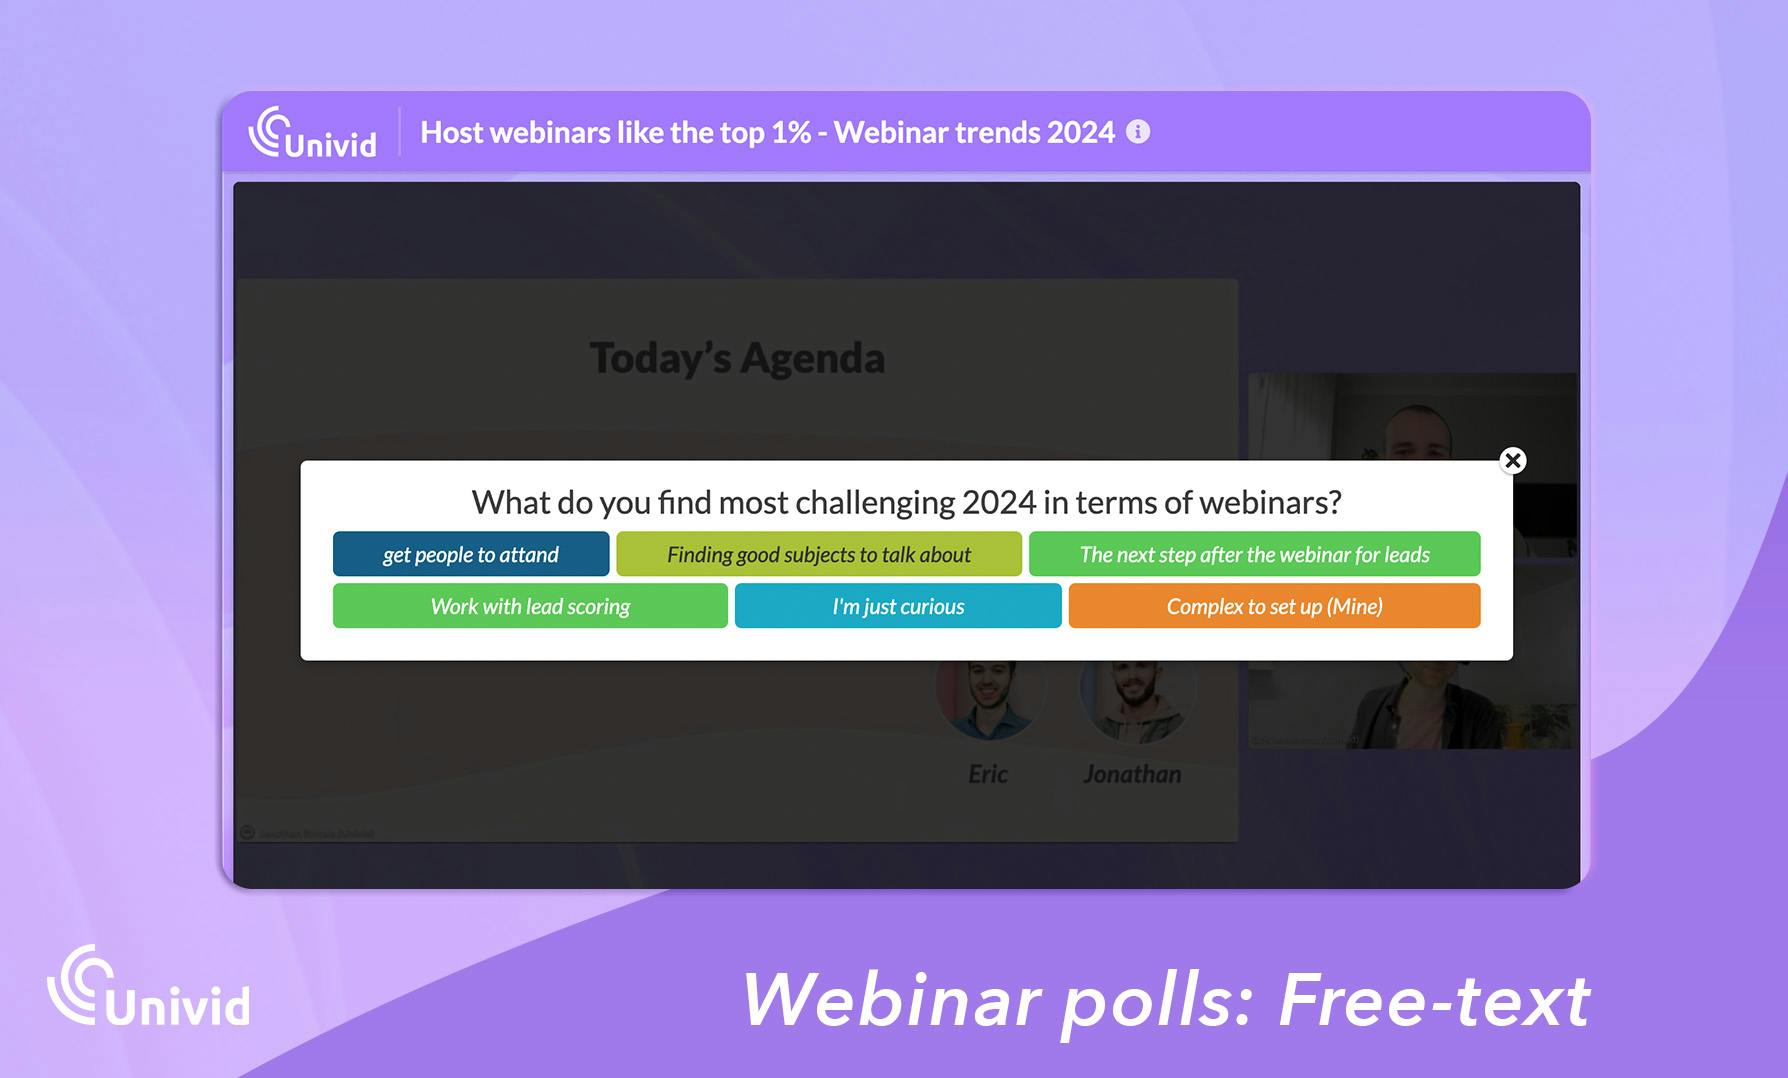 Free-text polls - Interactive webinars